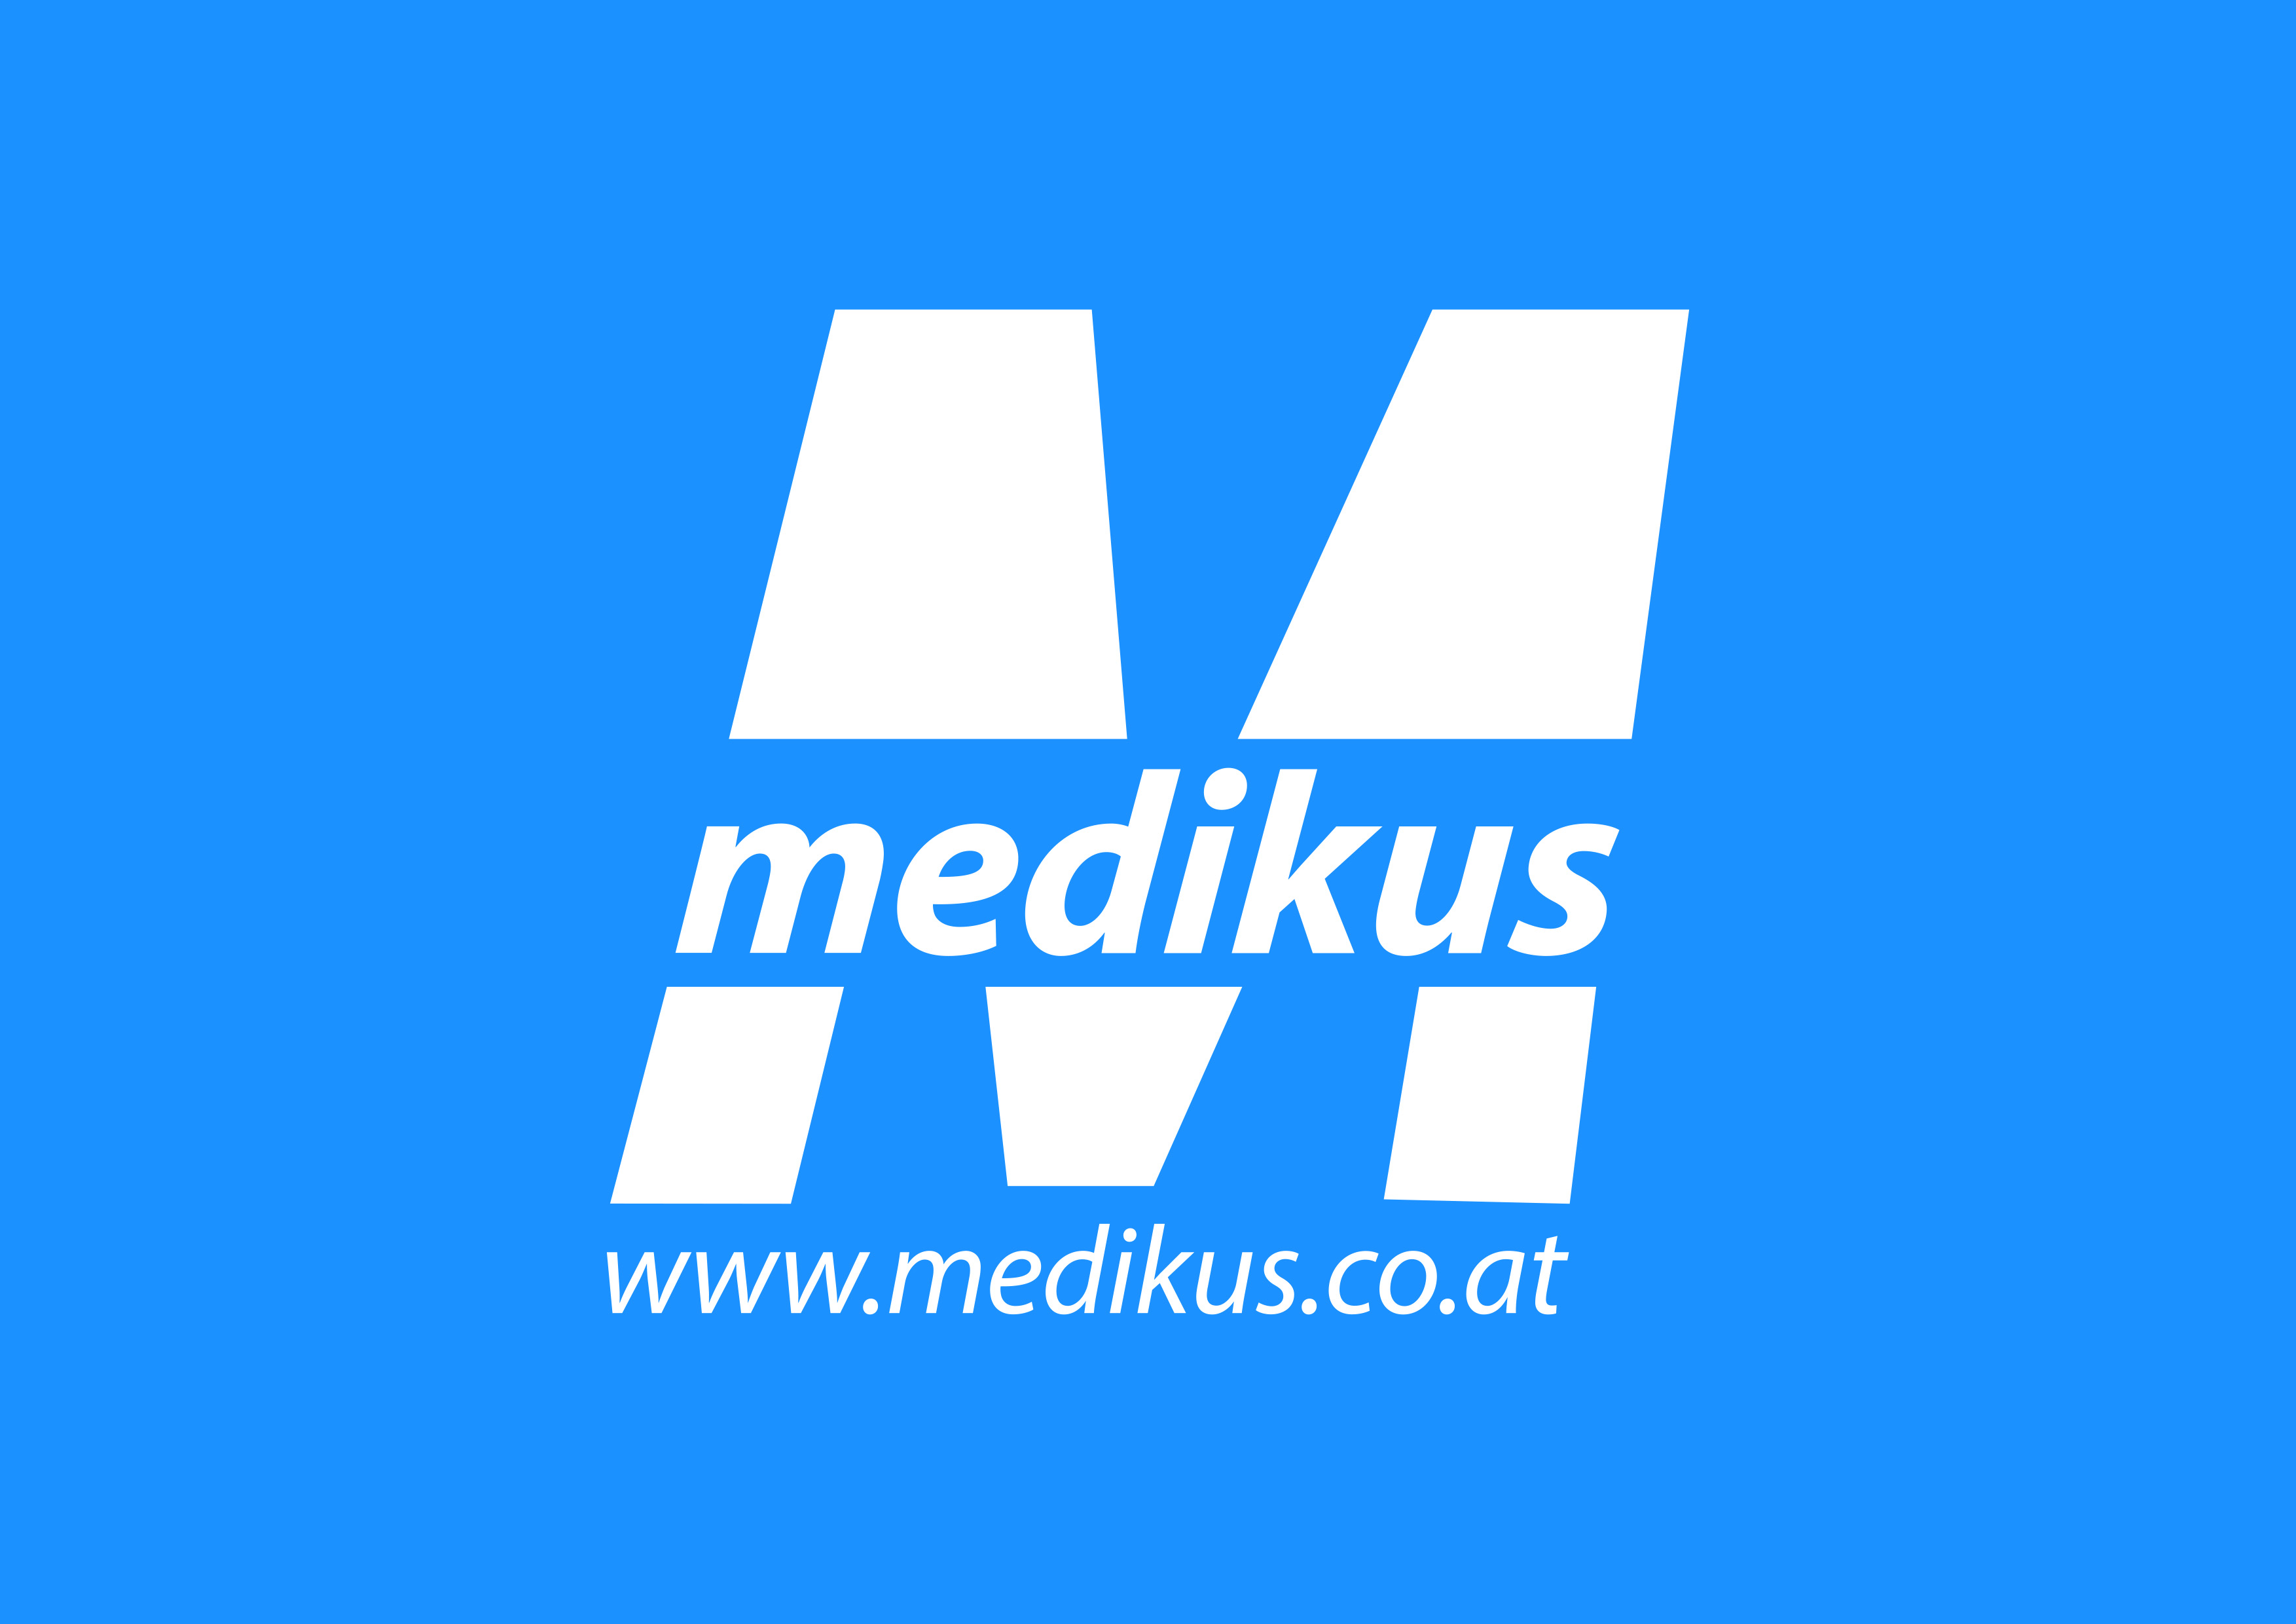 medikus Logo neg 4c